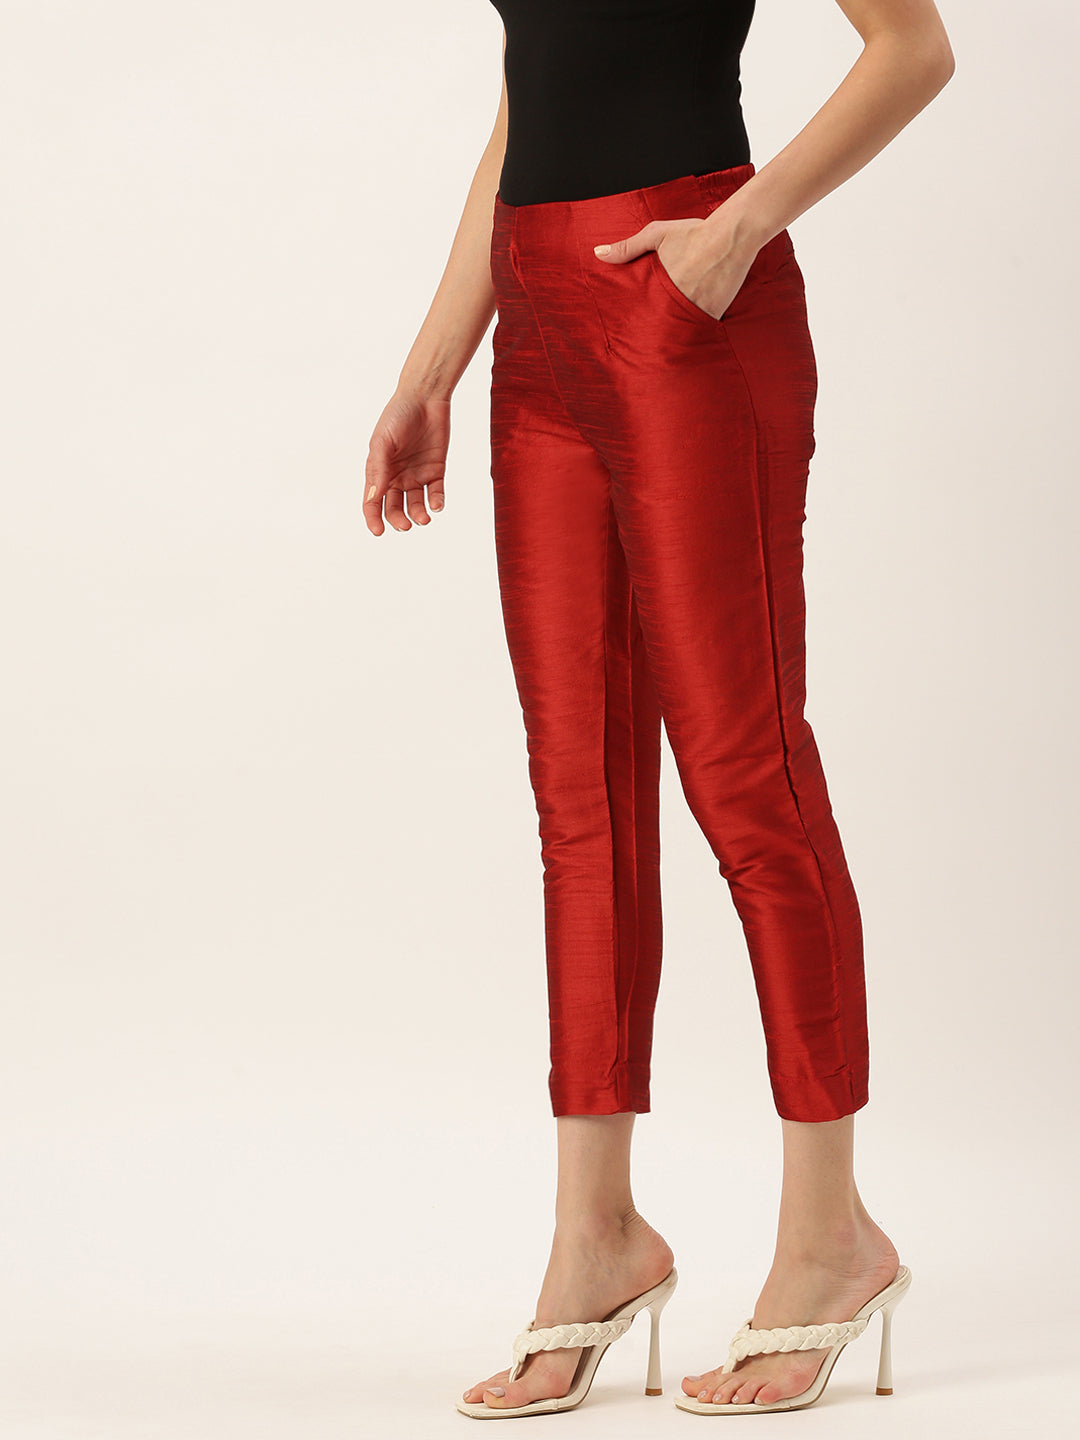 BNWT XS Zara Red Suit Coord 2 Pieces Blazer+Cigarette Pants Gold Button  2014/691 | eBay